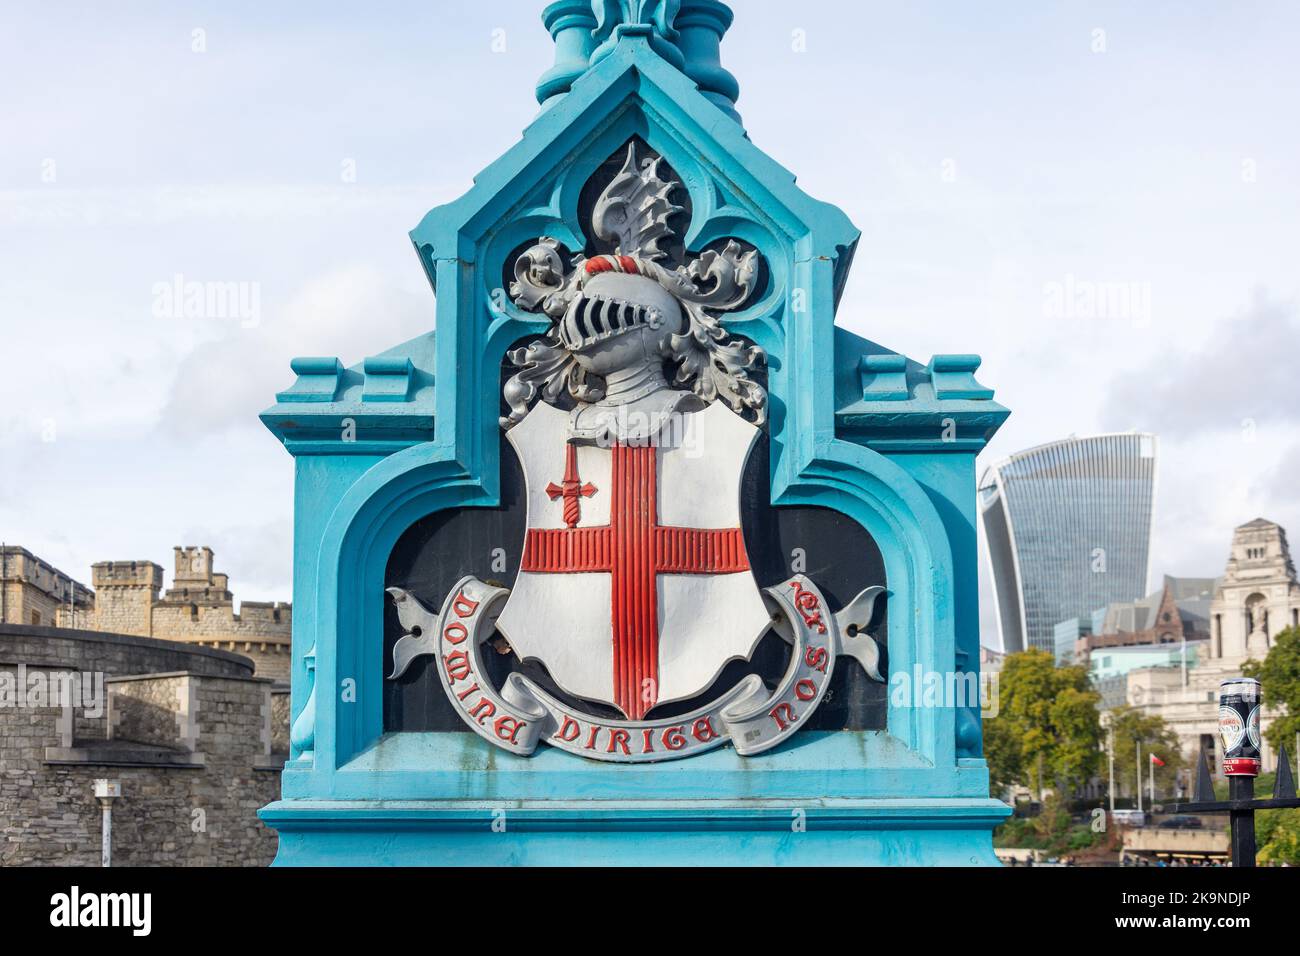 Stemma sulla lampada del Tower Bridge, Tower Bridge Approach, Tower Hill, London Borough of Tower Hamlets, Greater London, England, United Kingdom Foto Stock